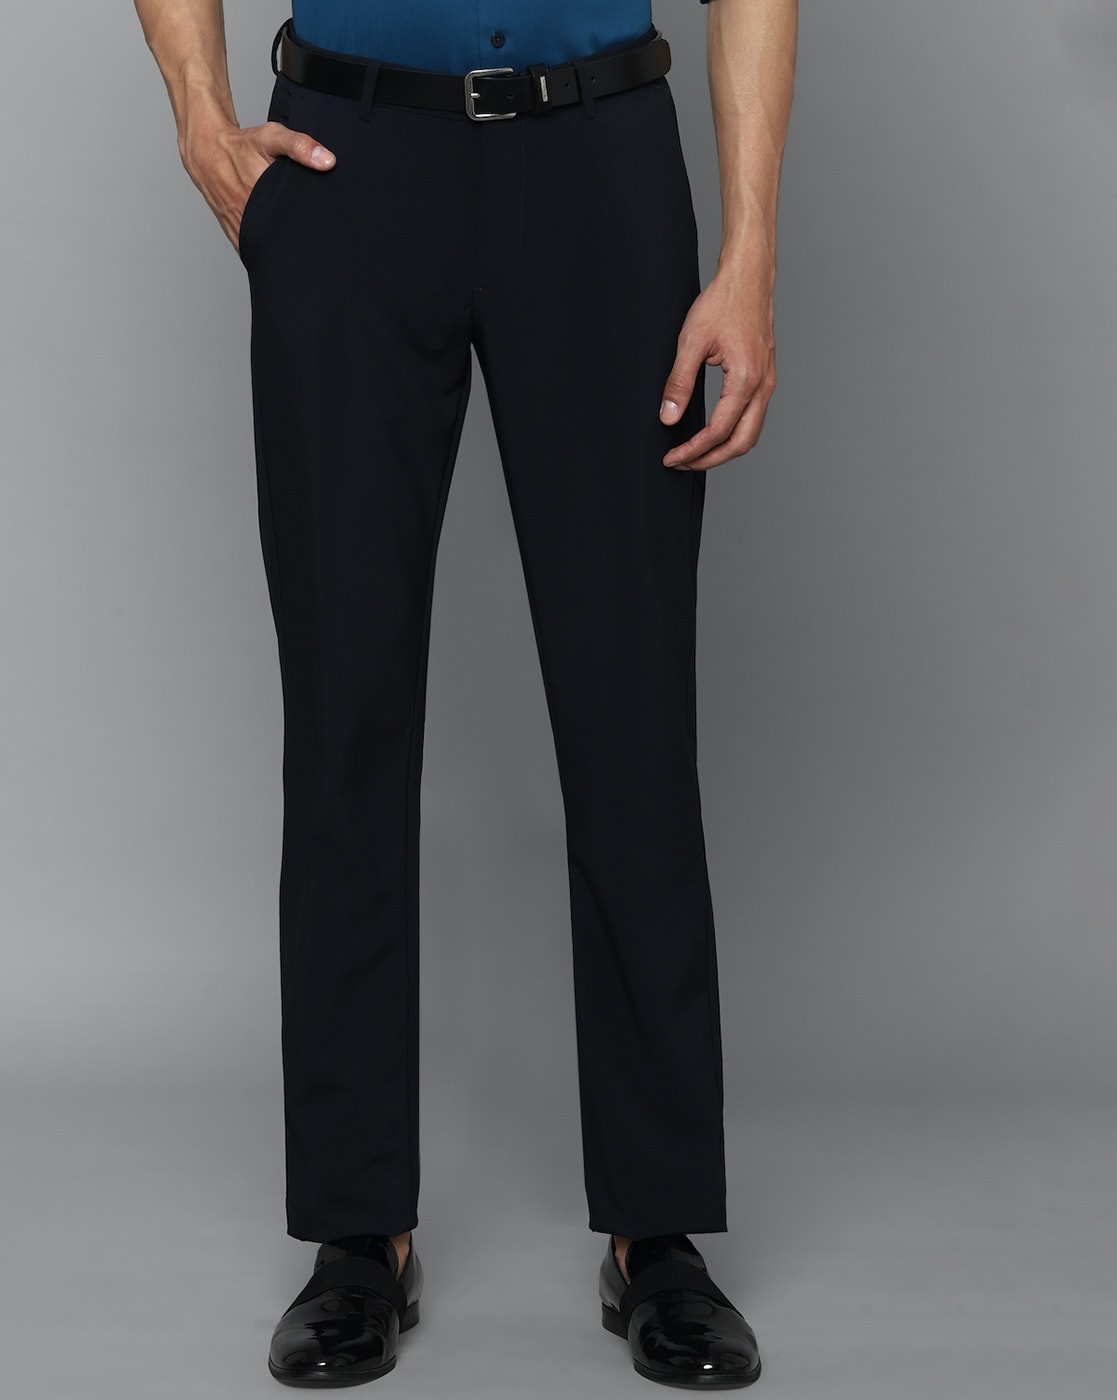 Buy Women Black Regular Fit Solid Casual Trousers Online  739089  Allen  Solly